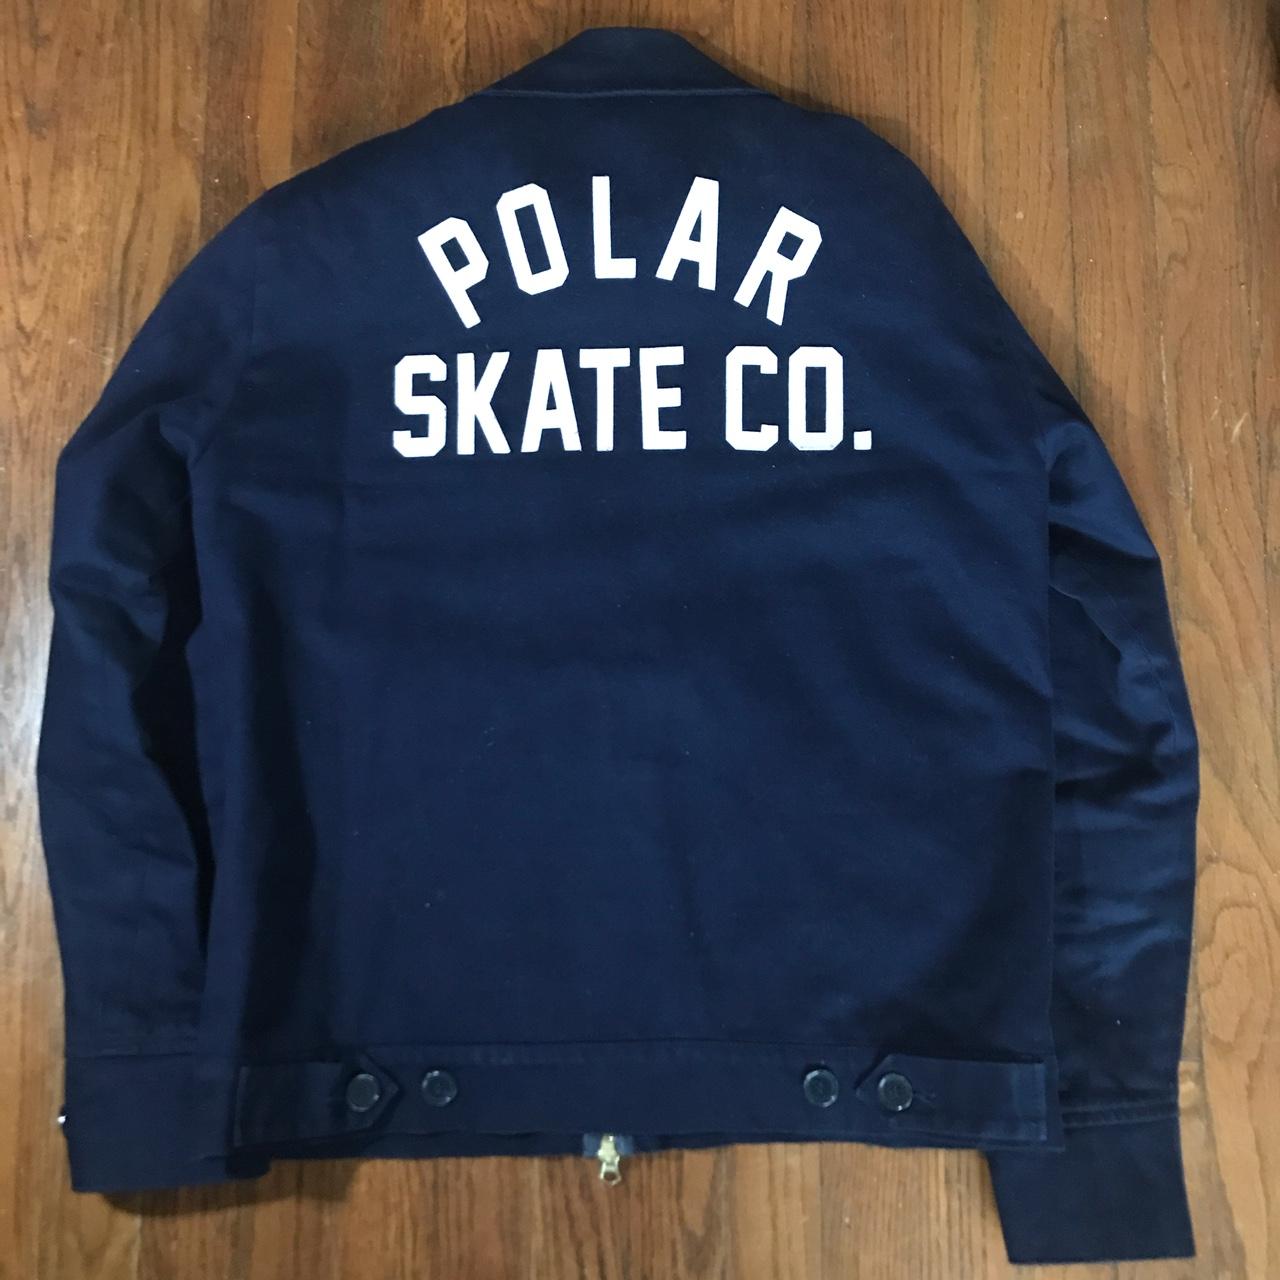 Polar Skate Co Men's Navy and White Jacket (3)